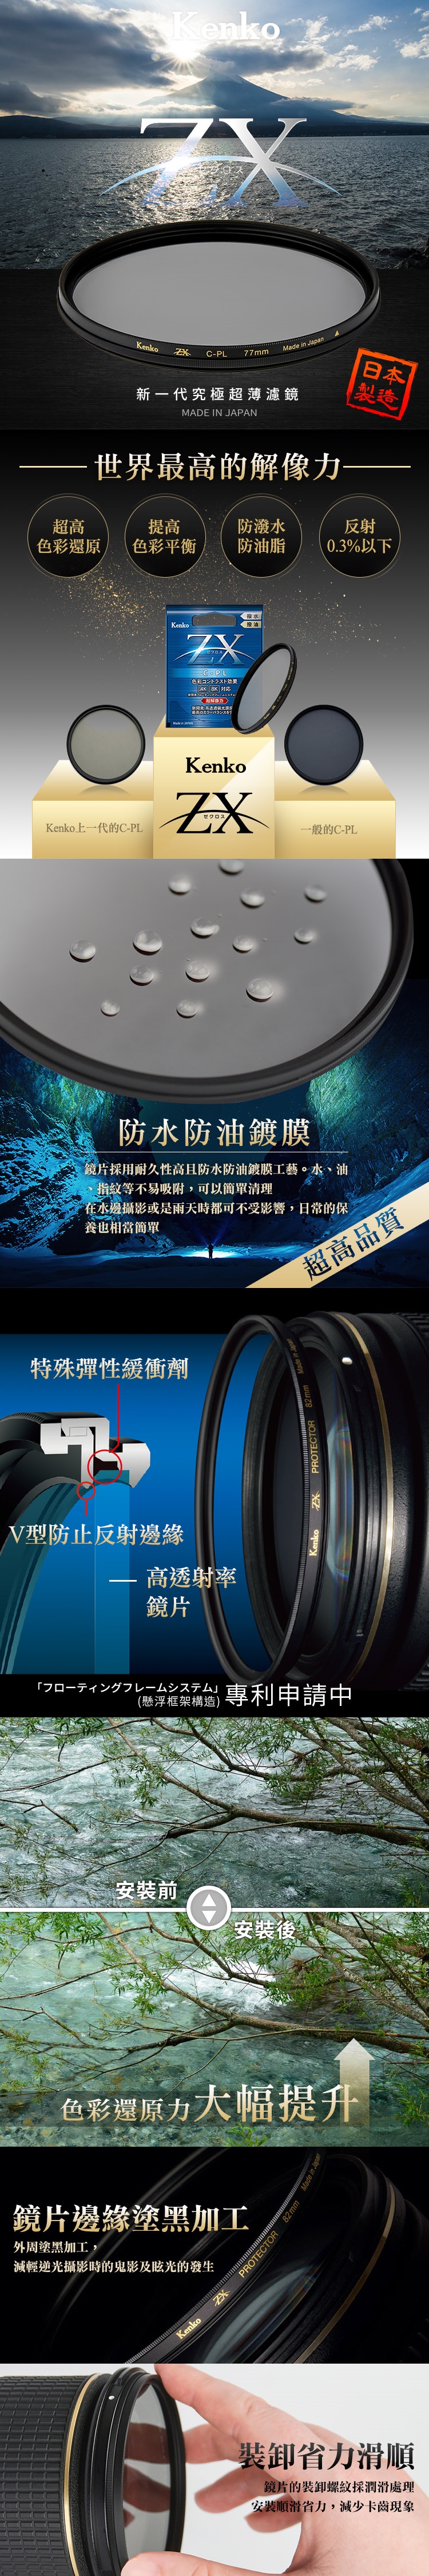 Kenko ZX CPL 77mm 抗污防潑4K/8K高清解析偏光鏡-日本製|會員獨享好康